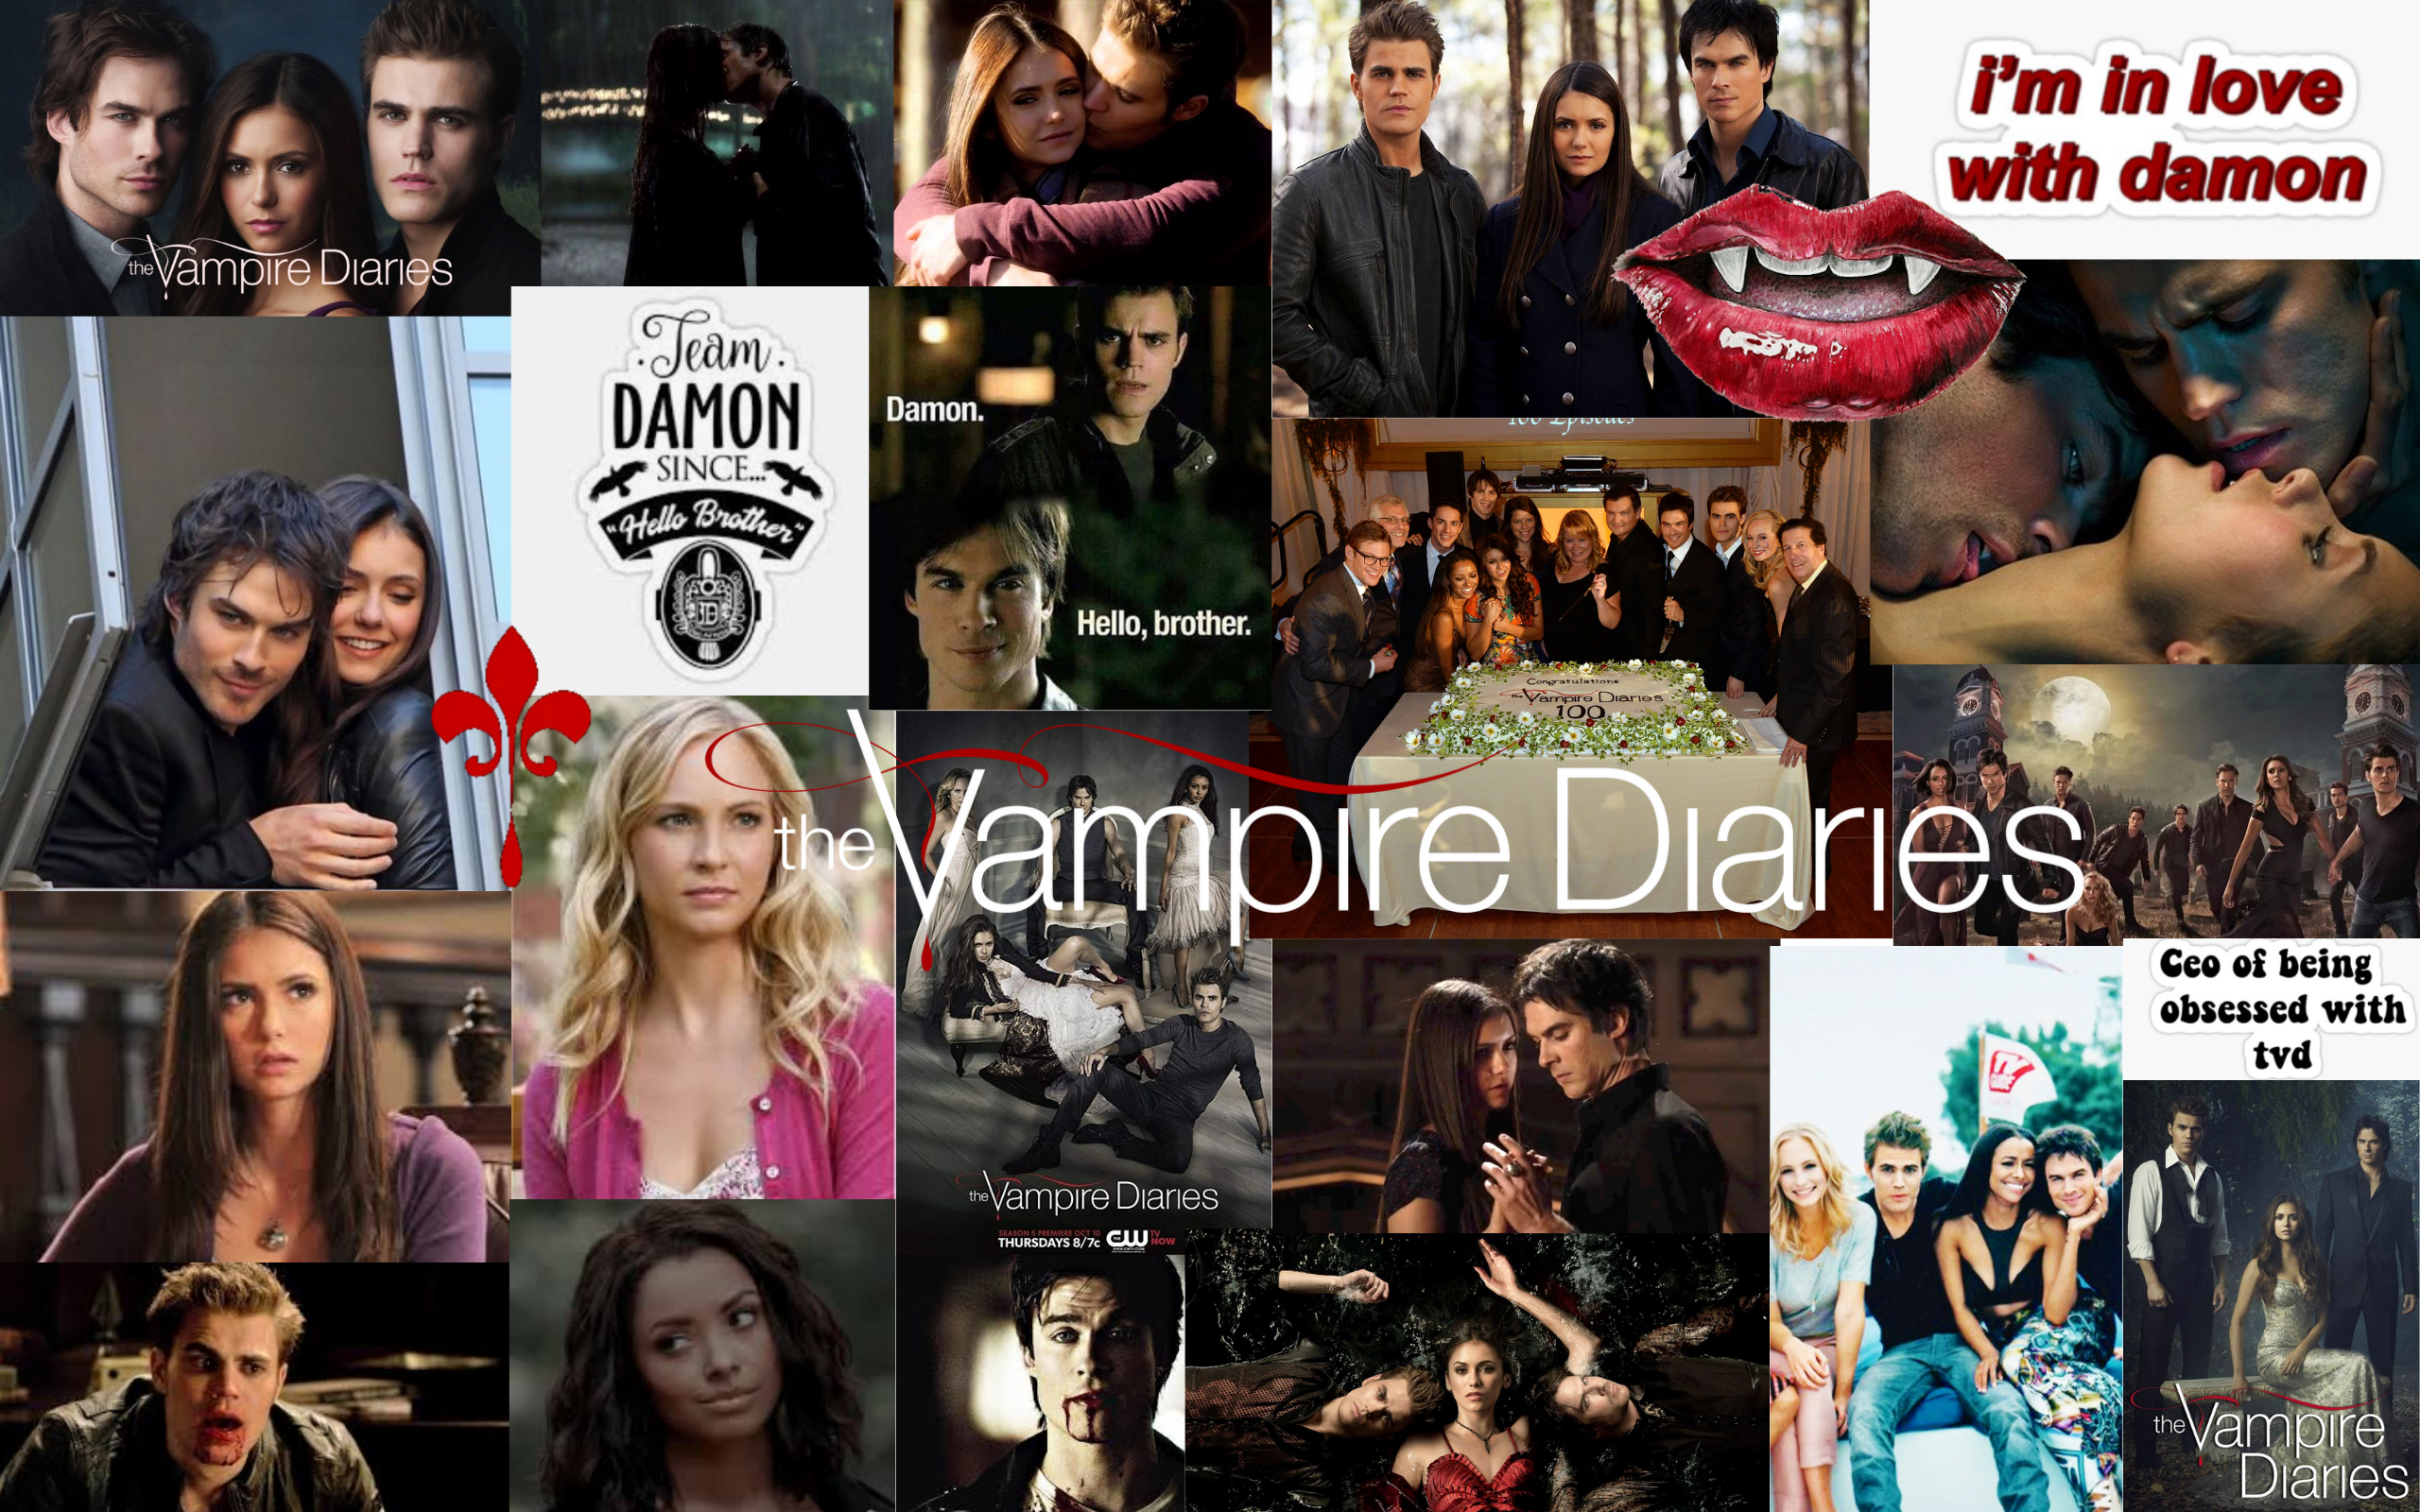 Tvd Wallpaper(laptop). Vampire diaries wallpaper, Vampire diaries, Vampire diaries poster